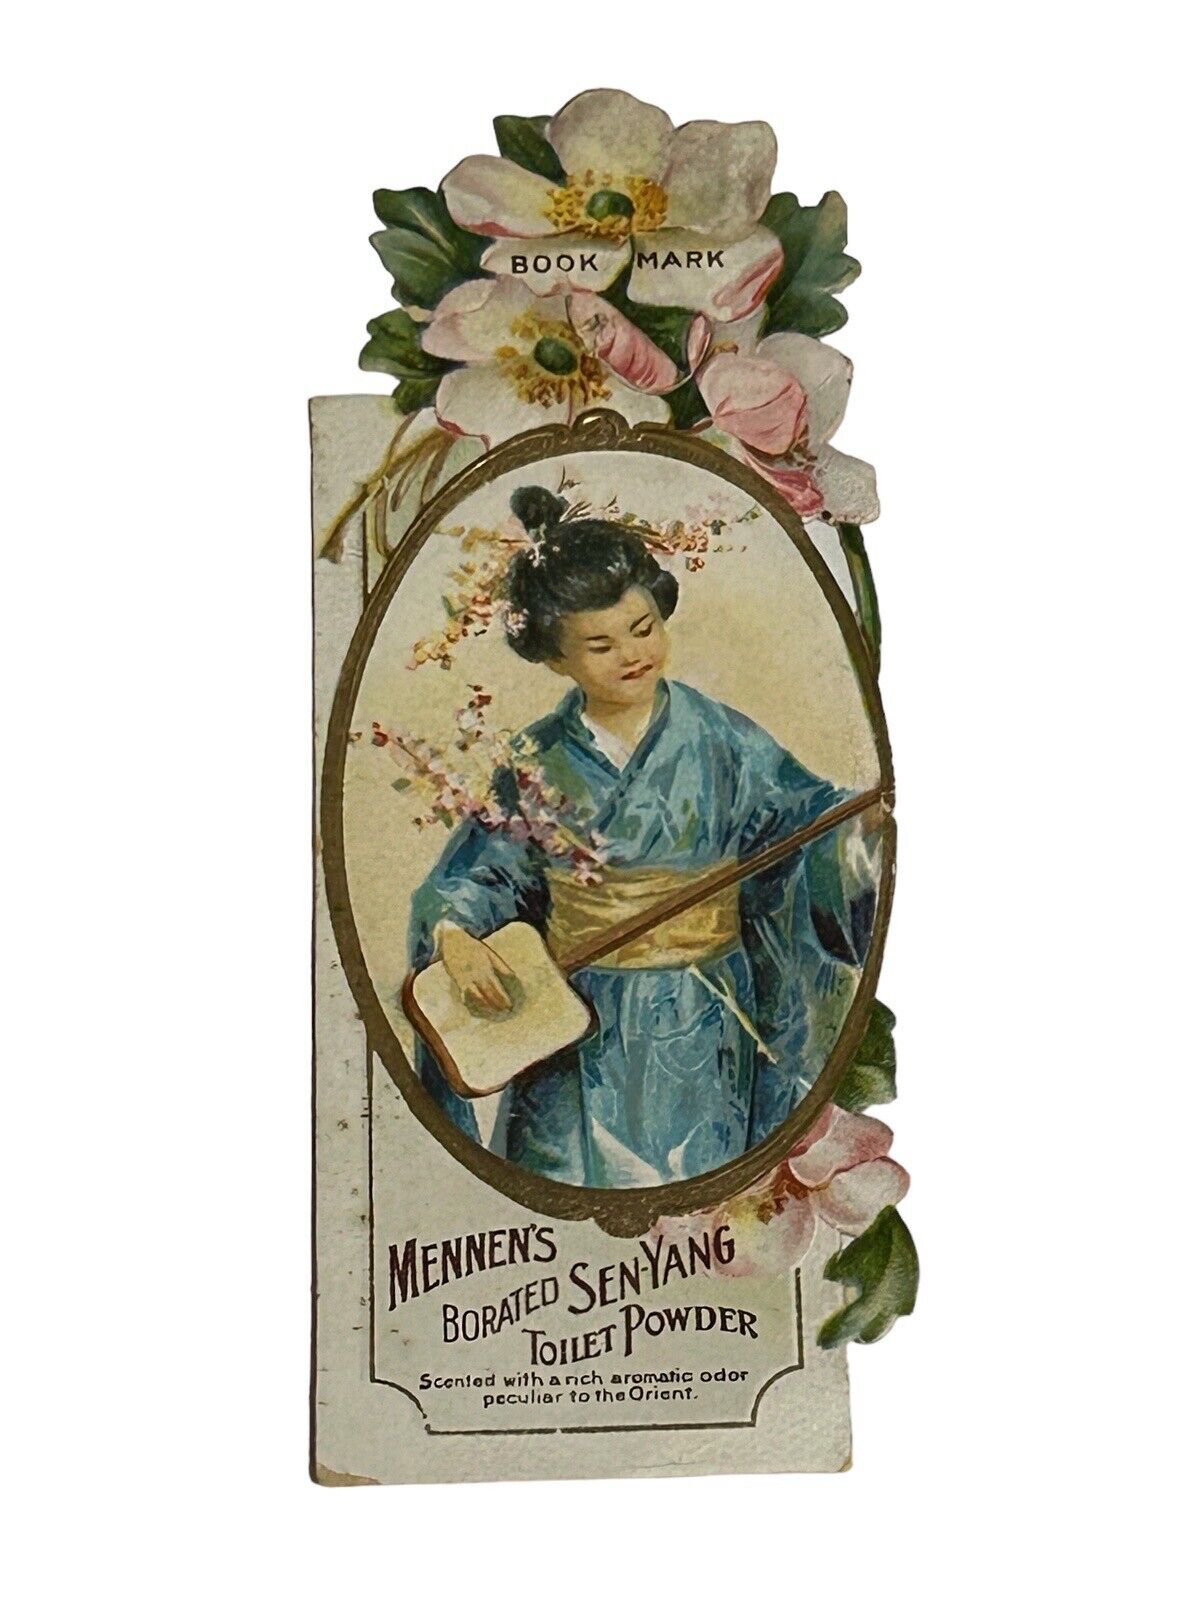 Mennens Borated Sen Yang Toilet Powder Woman Kimono Bookmark Die Cut  P371